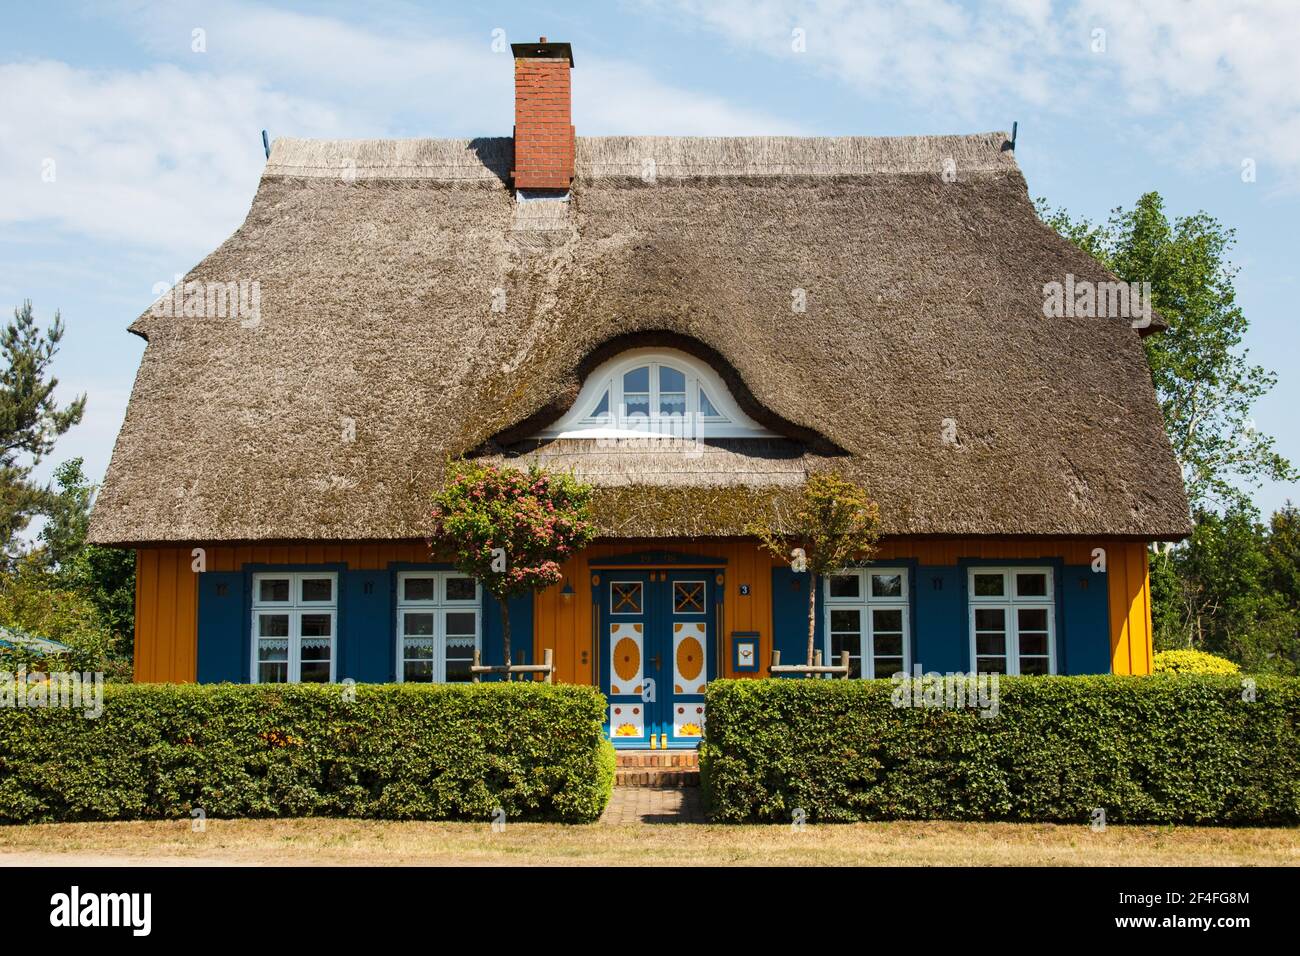 Casa sul tetto in paglia, Wieck am Darss, Meclemburgo-Pomerania occidentale, Germania Foto Stock